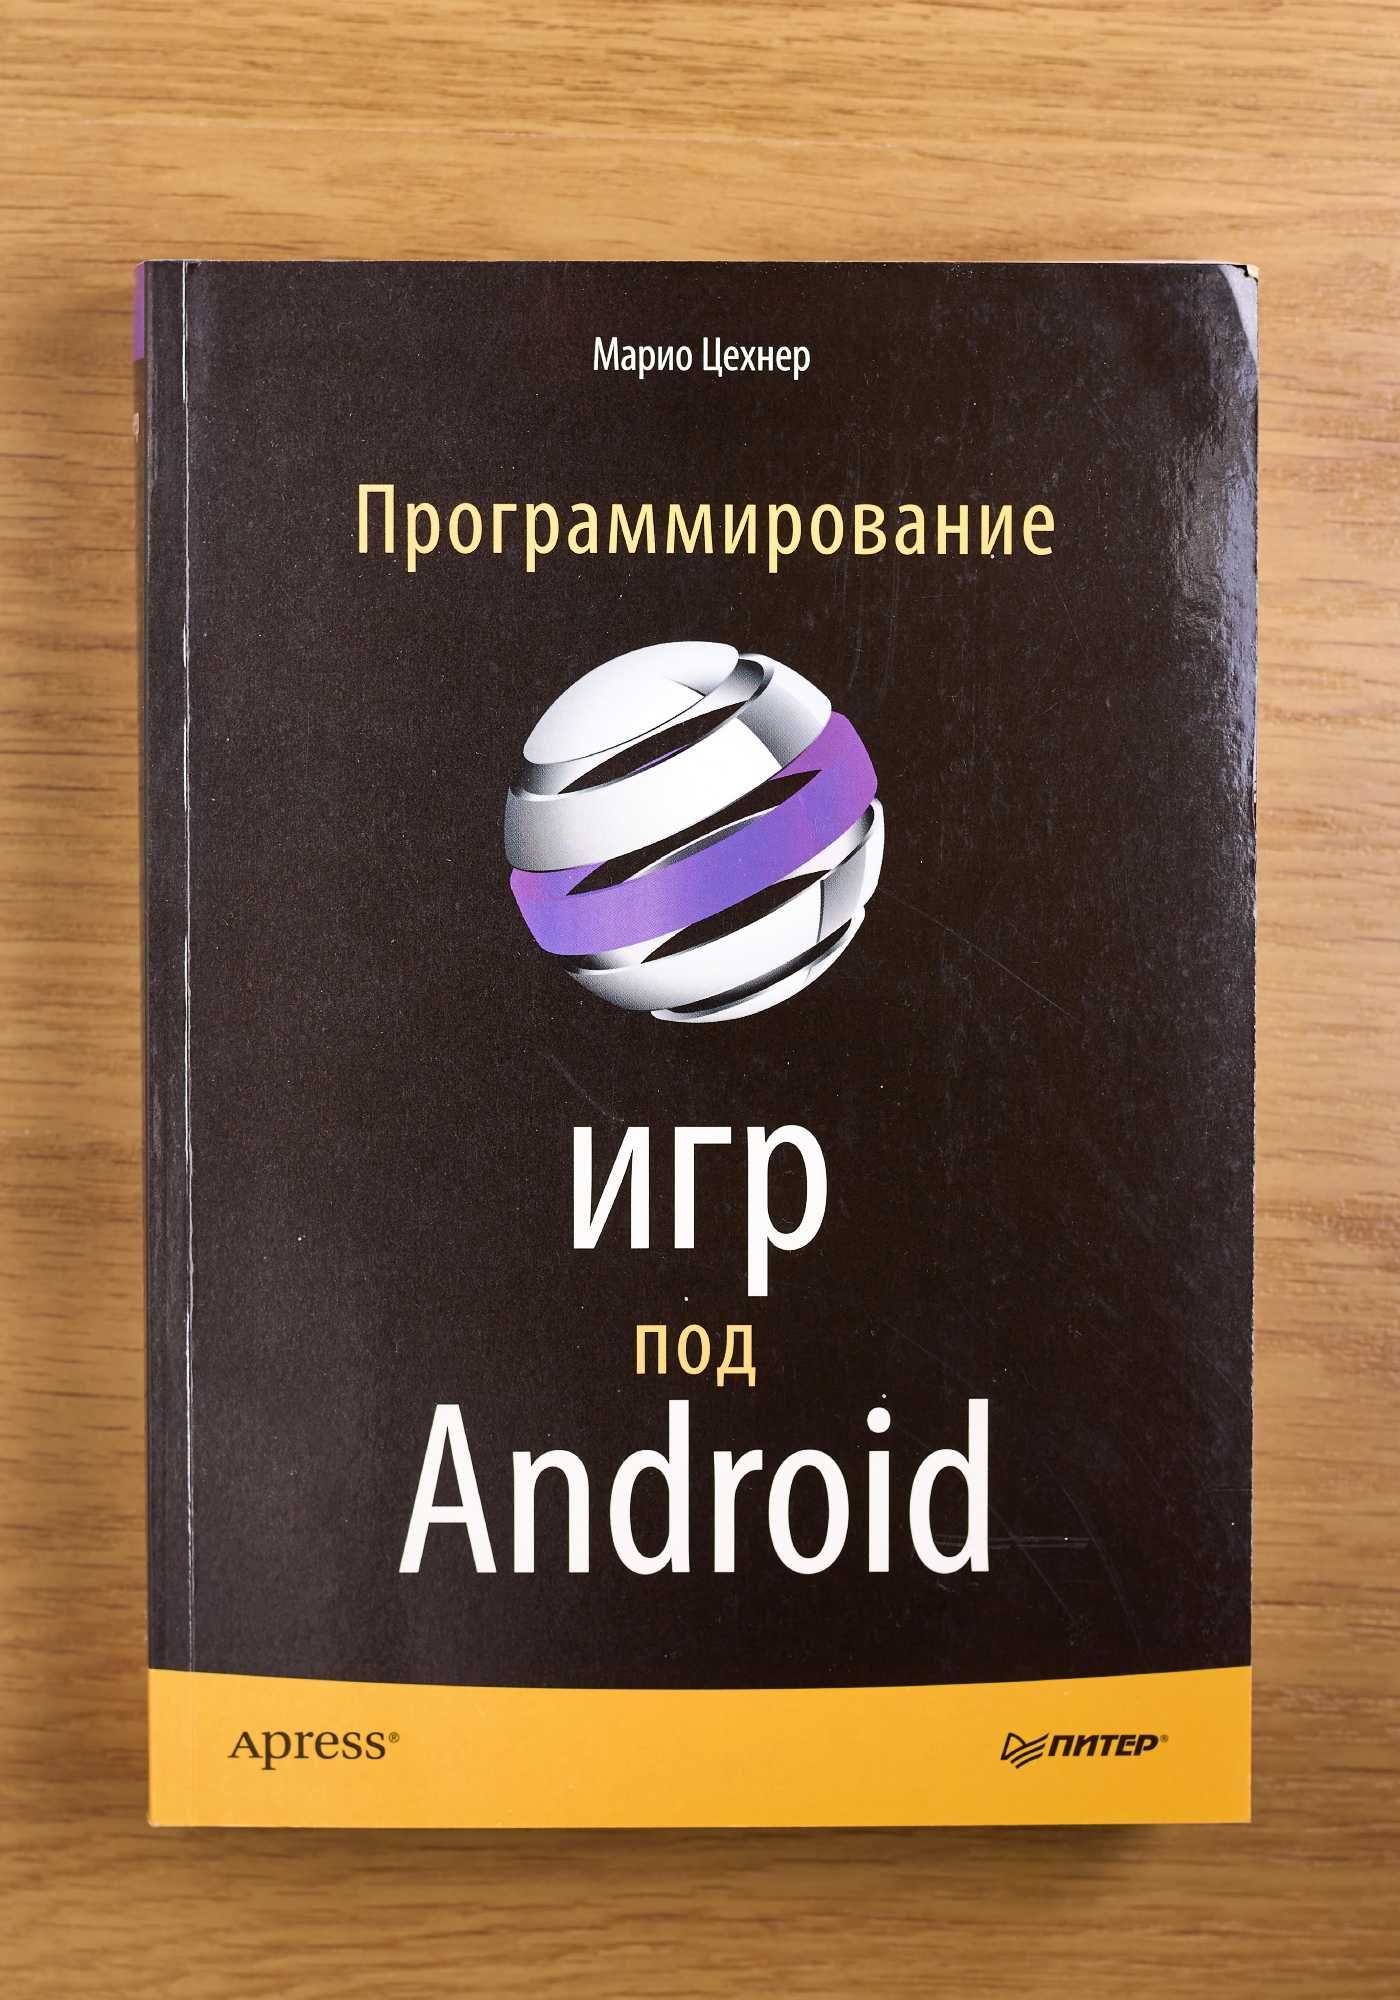 Книга "Программирование игр под Android"